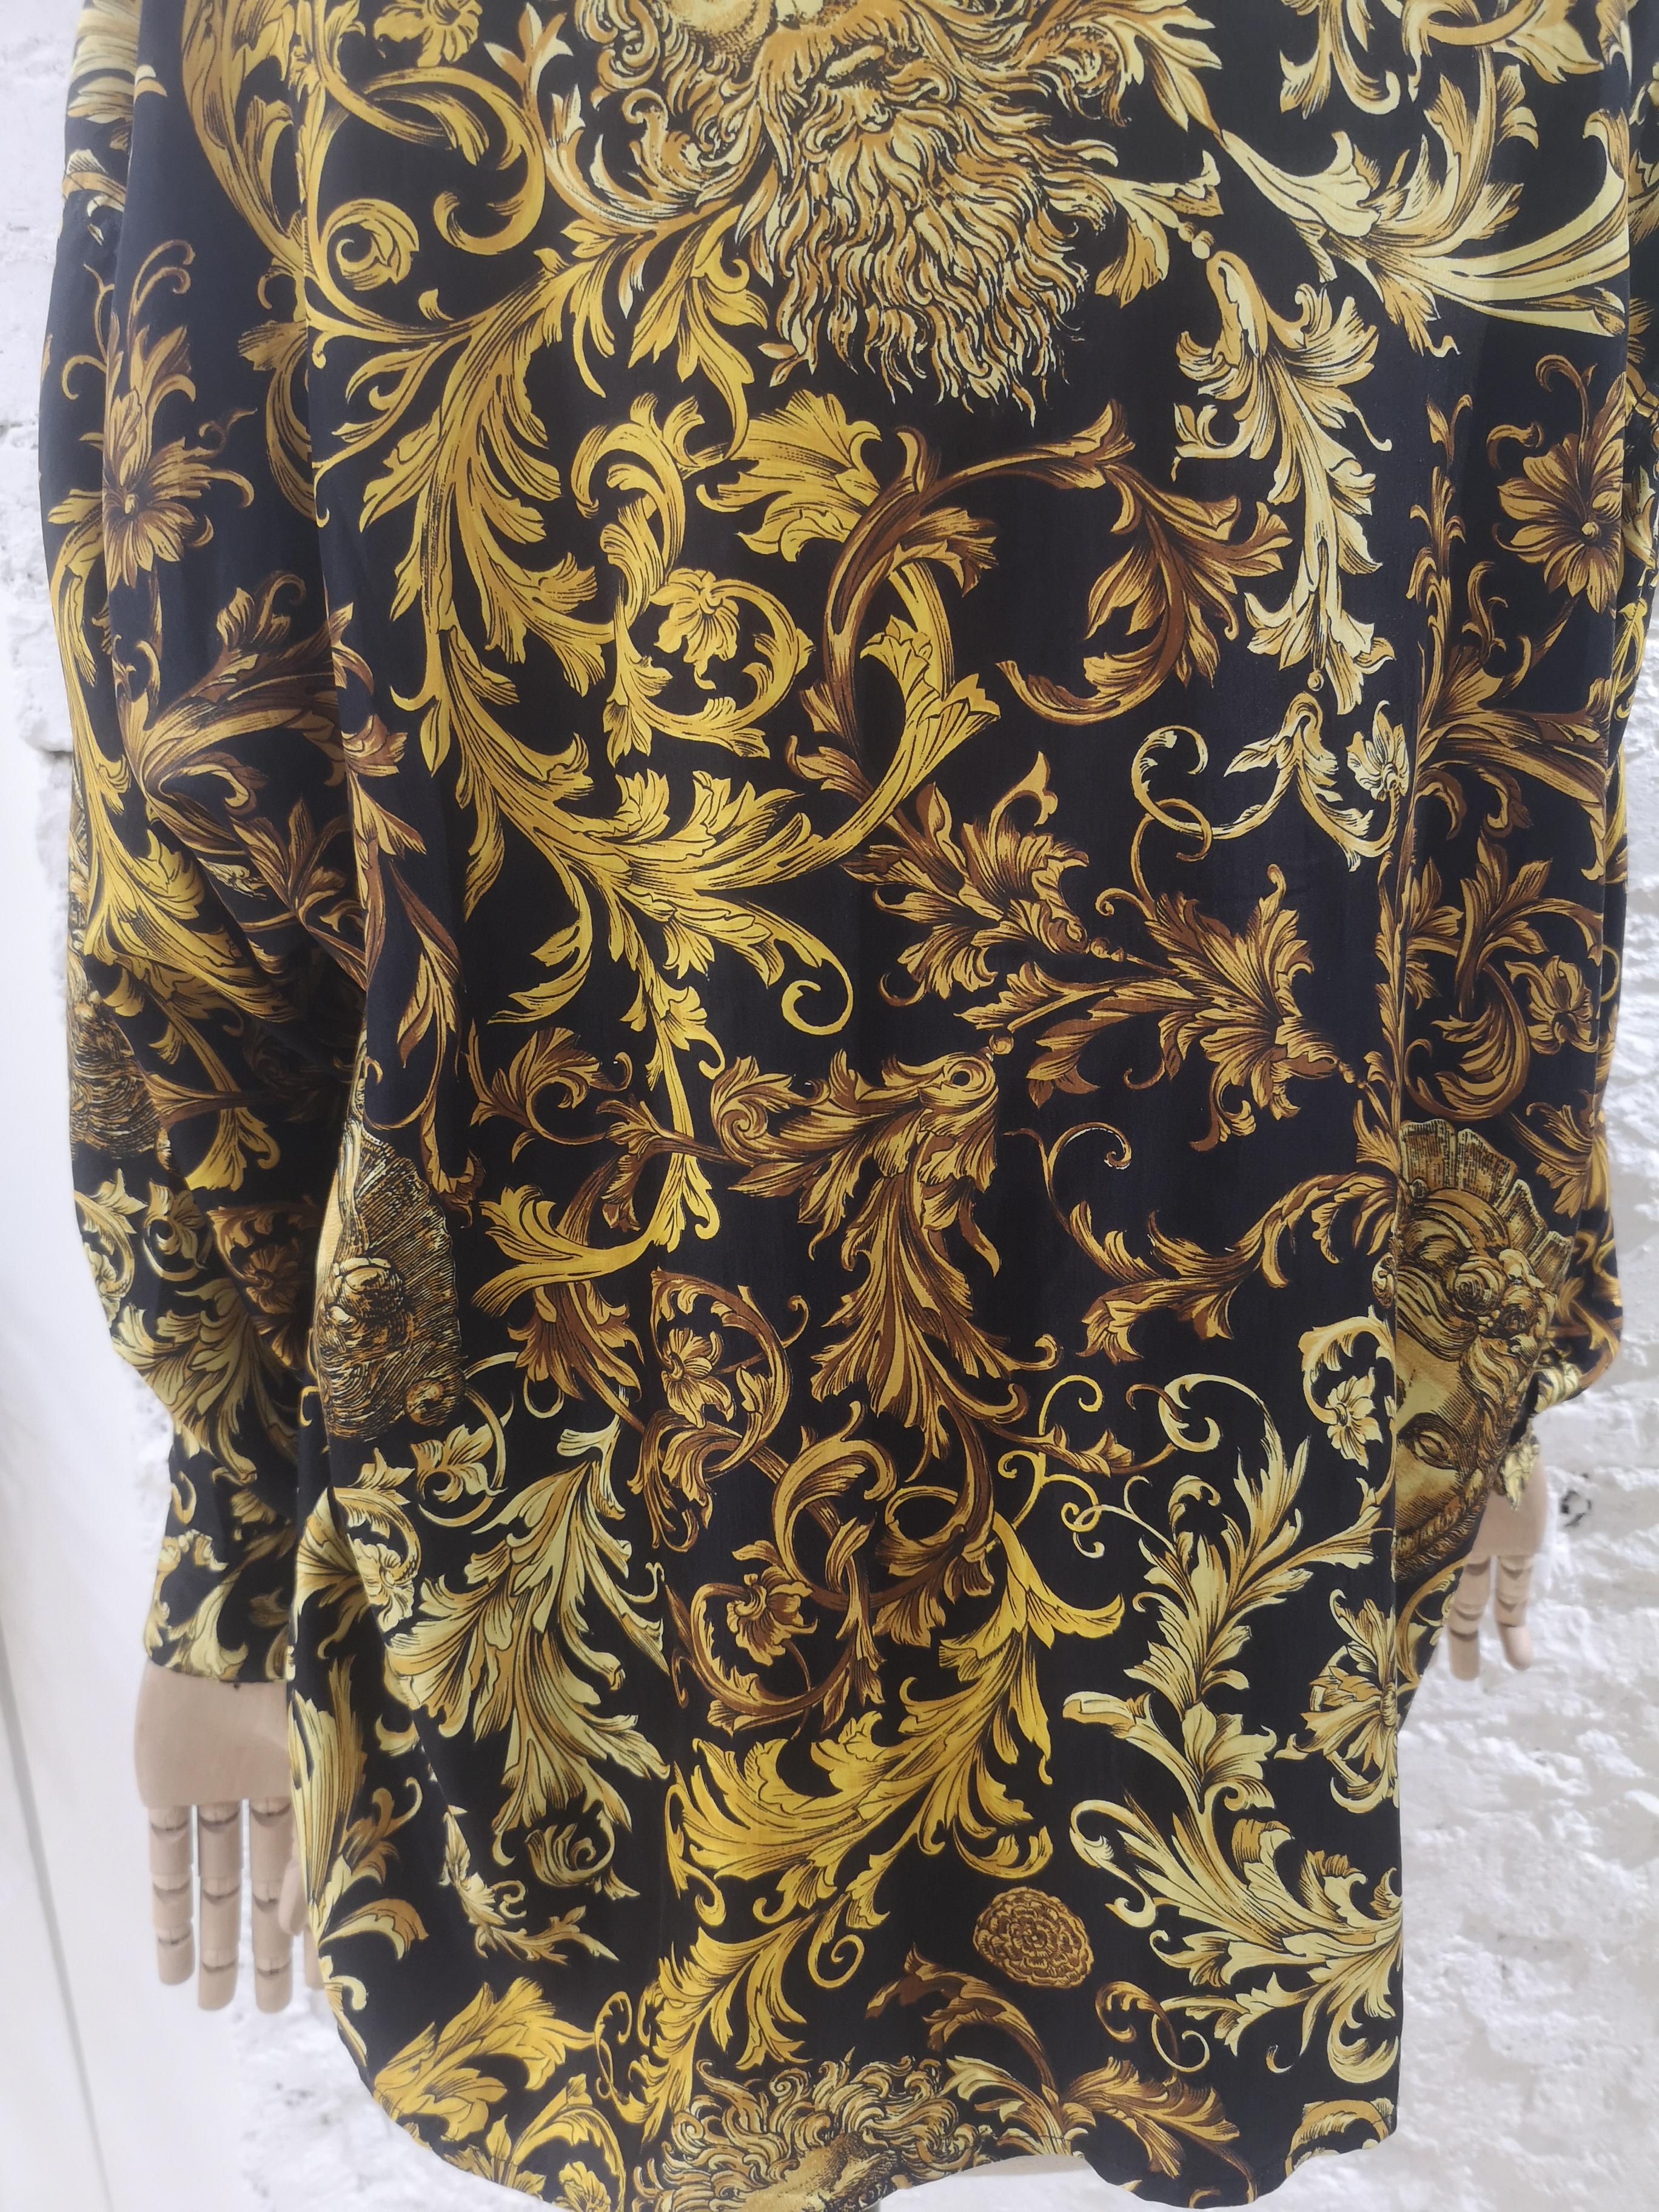 Versace Baroque shirt 
Size S 